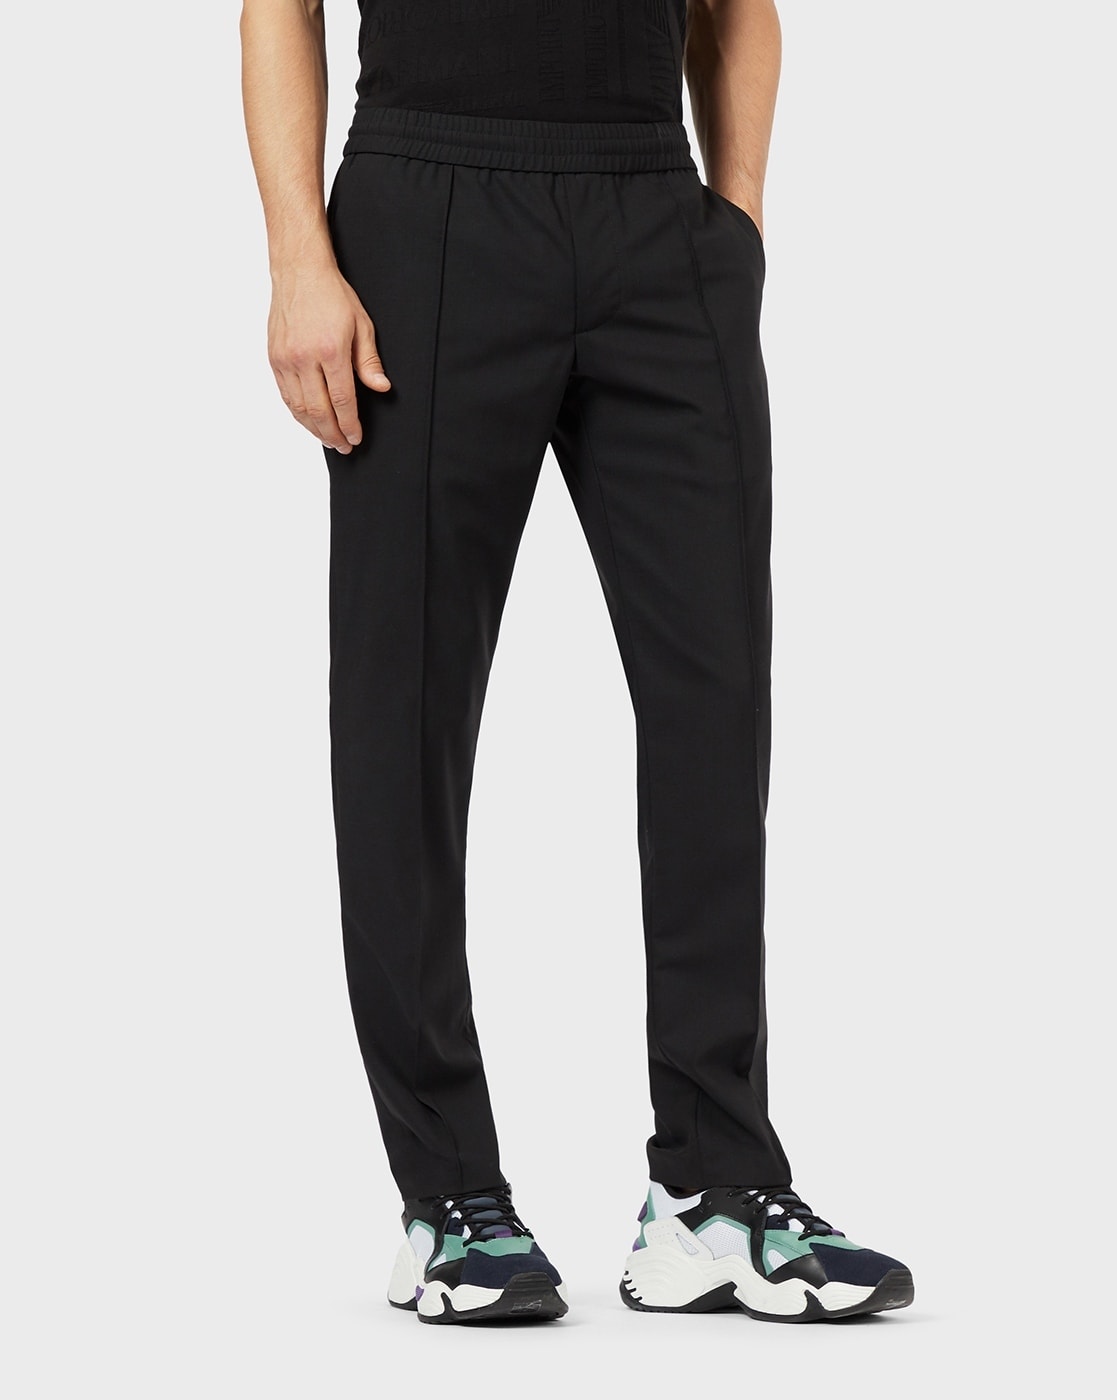 Buy Nero Black Trousers  Pants for Men by EMPORIO ARMANI Online  Ajiocom